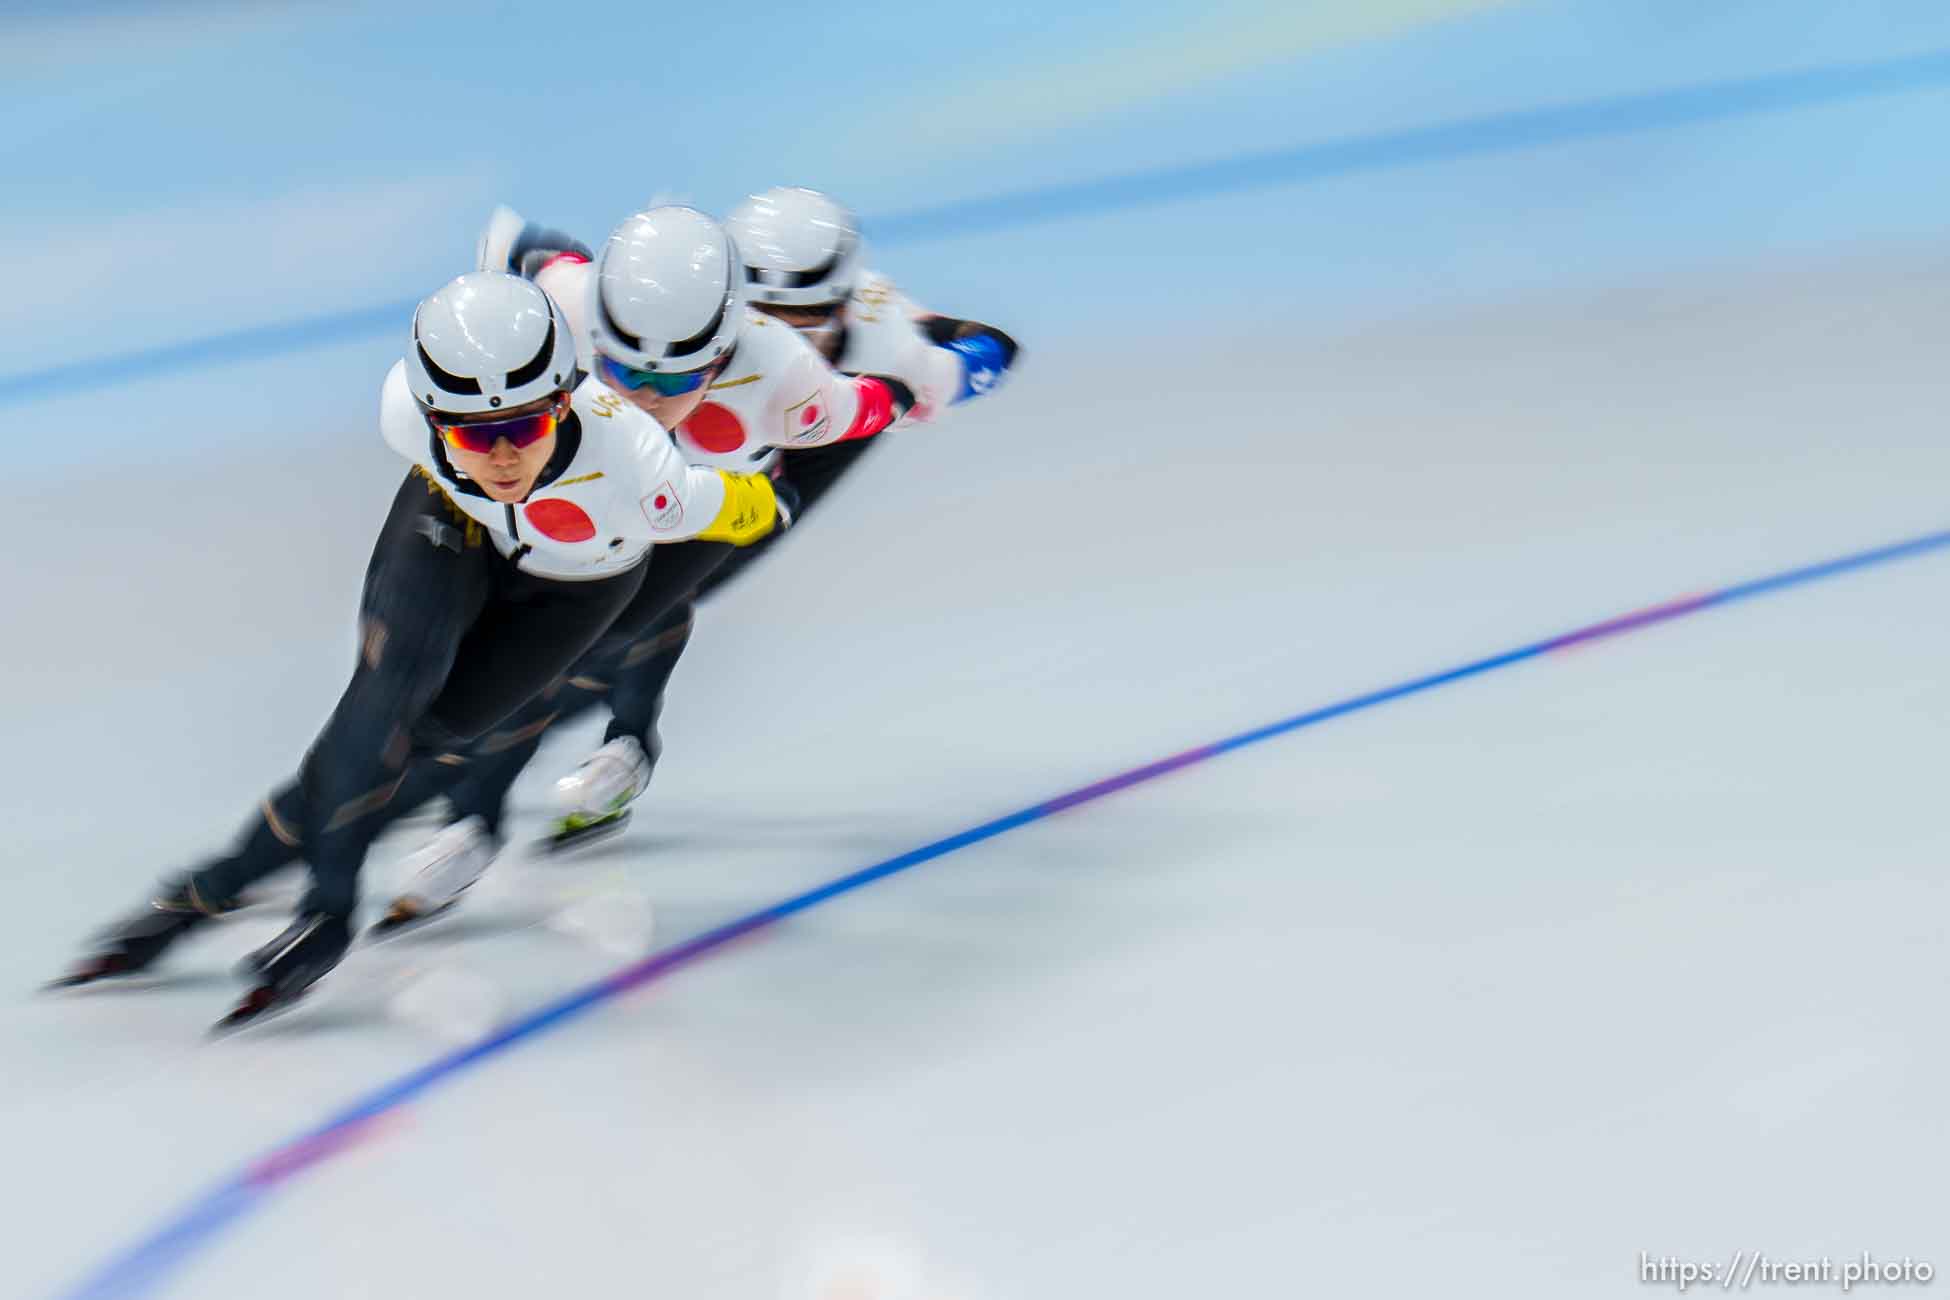 (Trent Nelson  |  The Salt Lake Tribune) Japan, semifinals in team pursuit at the 2022 Winter Olympics in Beijing on Tuesday, Feb. 15, 2022. 1 - Misaki Oshigiri, 2 - Ayano Sato, 3 - Miho Takagi.